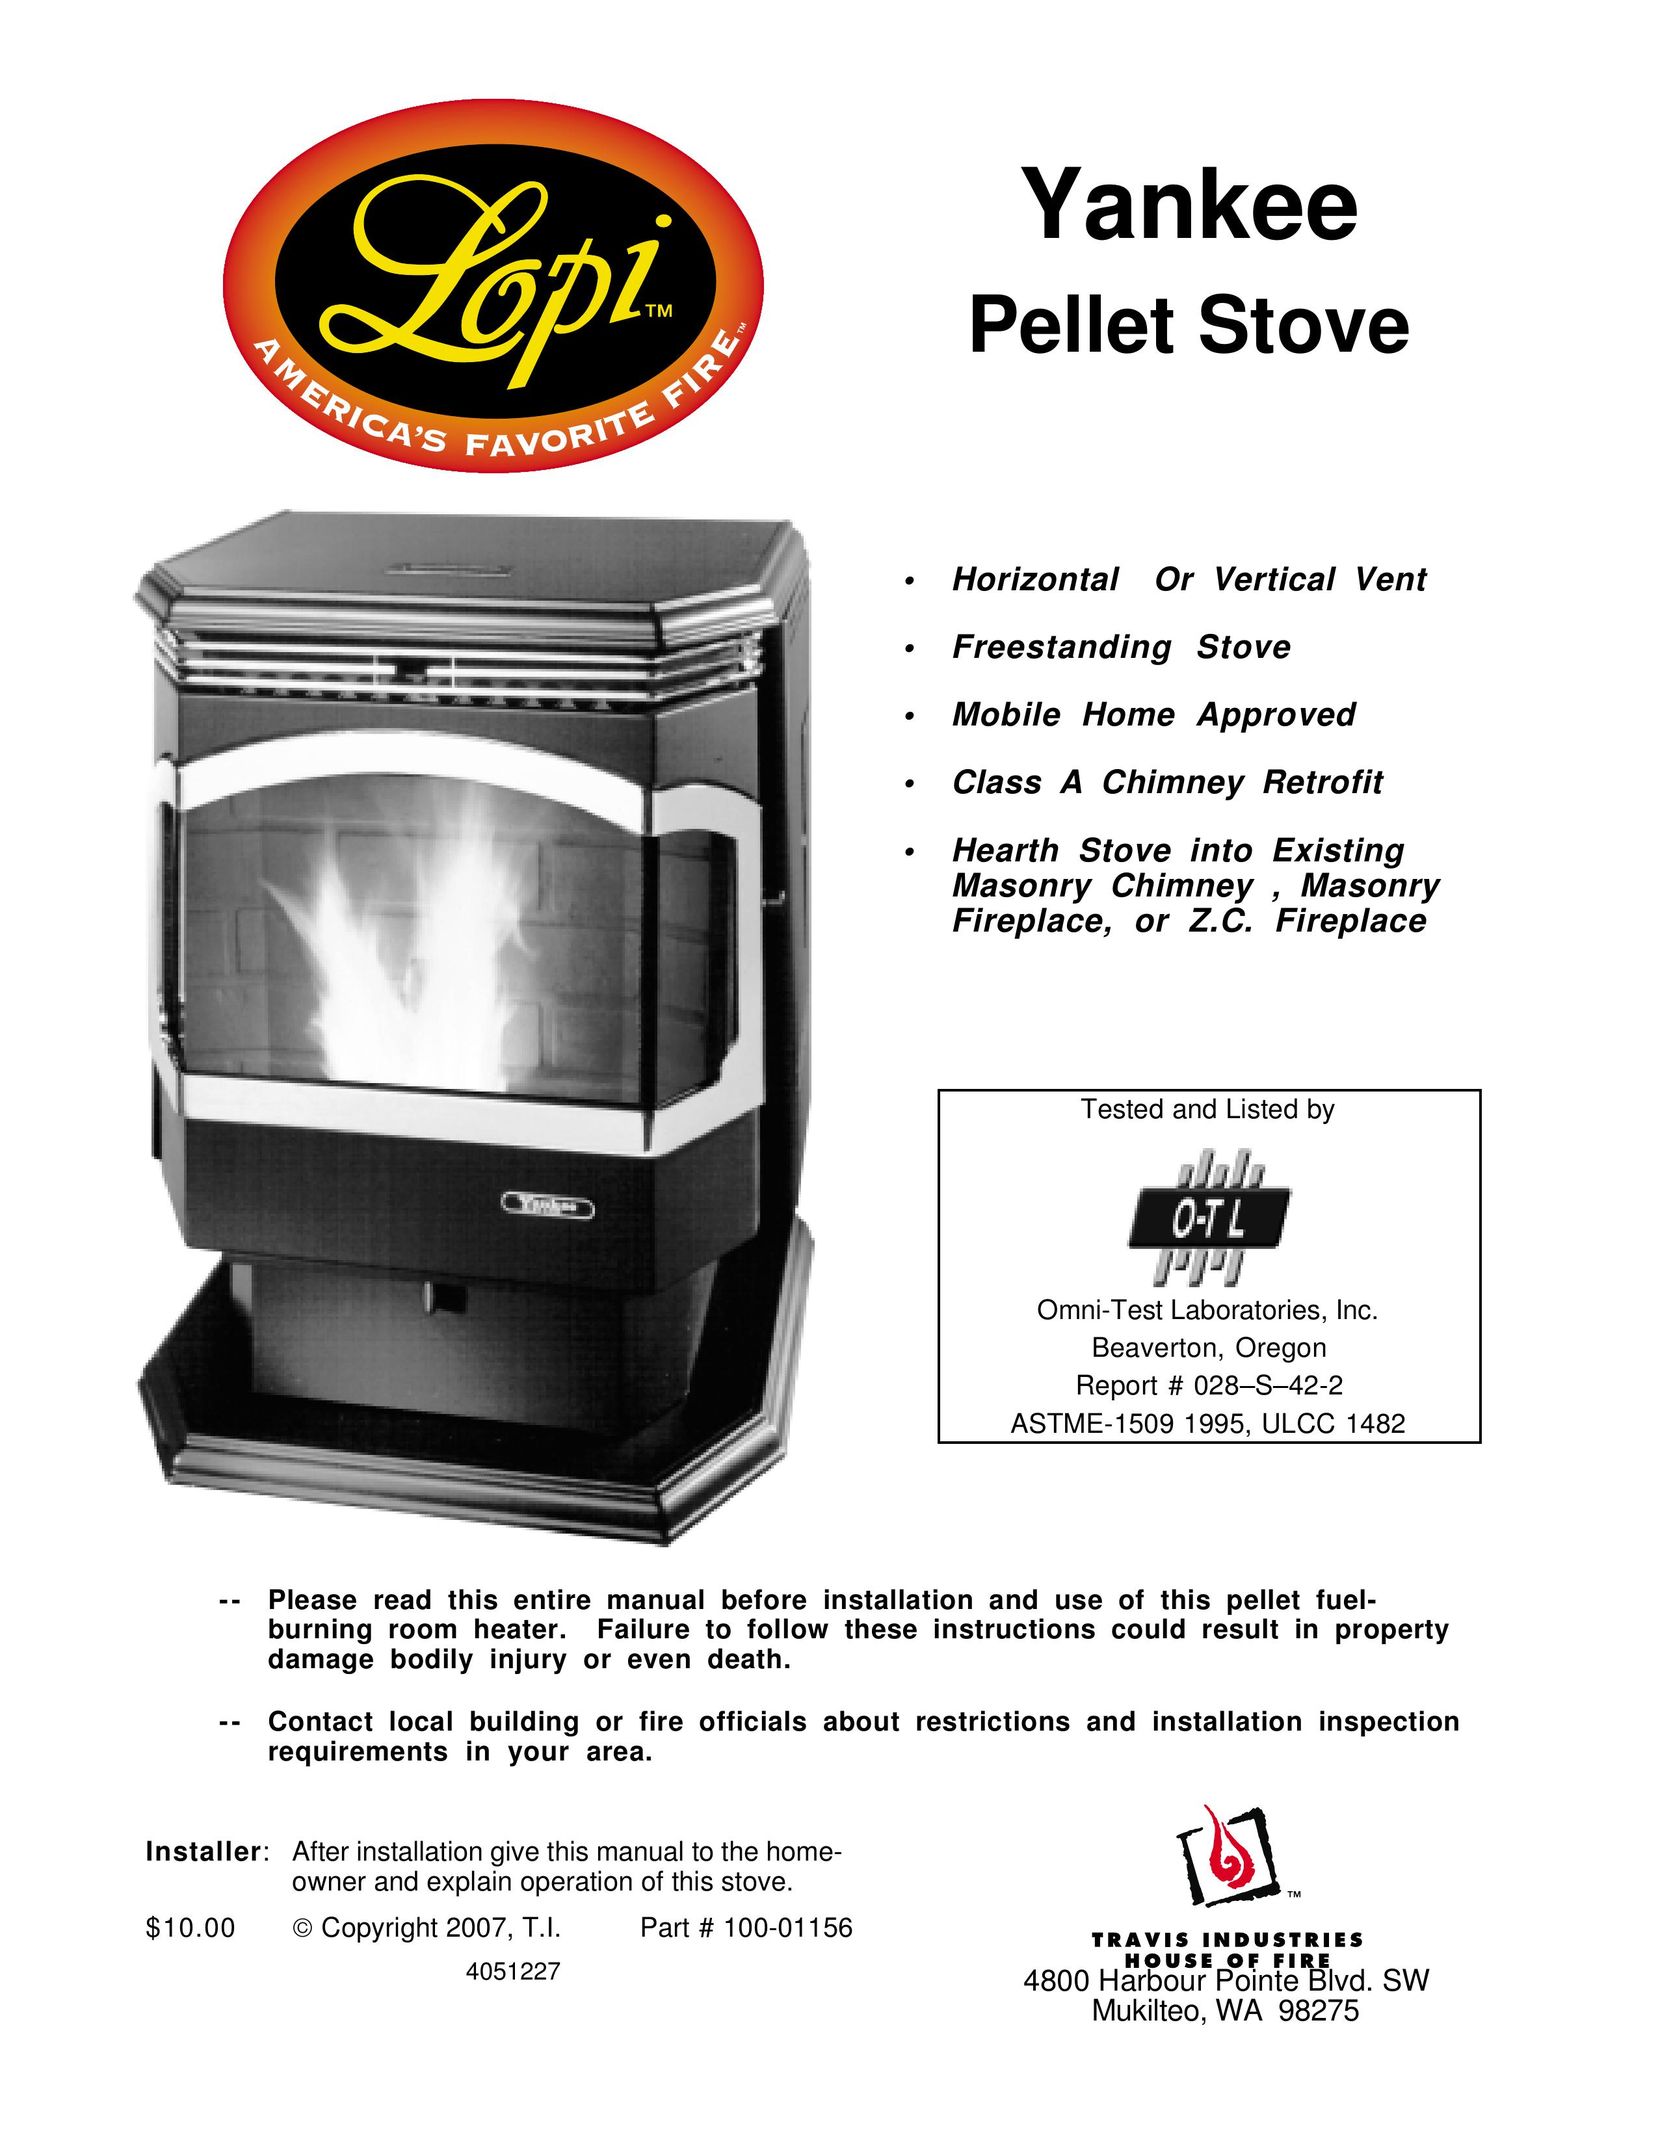 Lopi Horizontal Or Vertical Vent Freestanding Stove Yankee Pellet Stove Stove User Manual